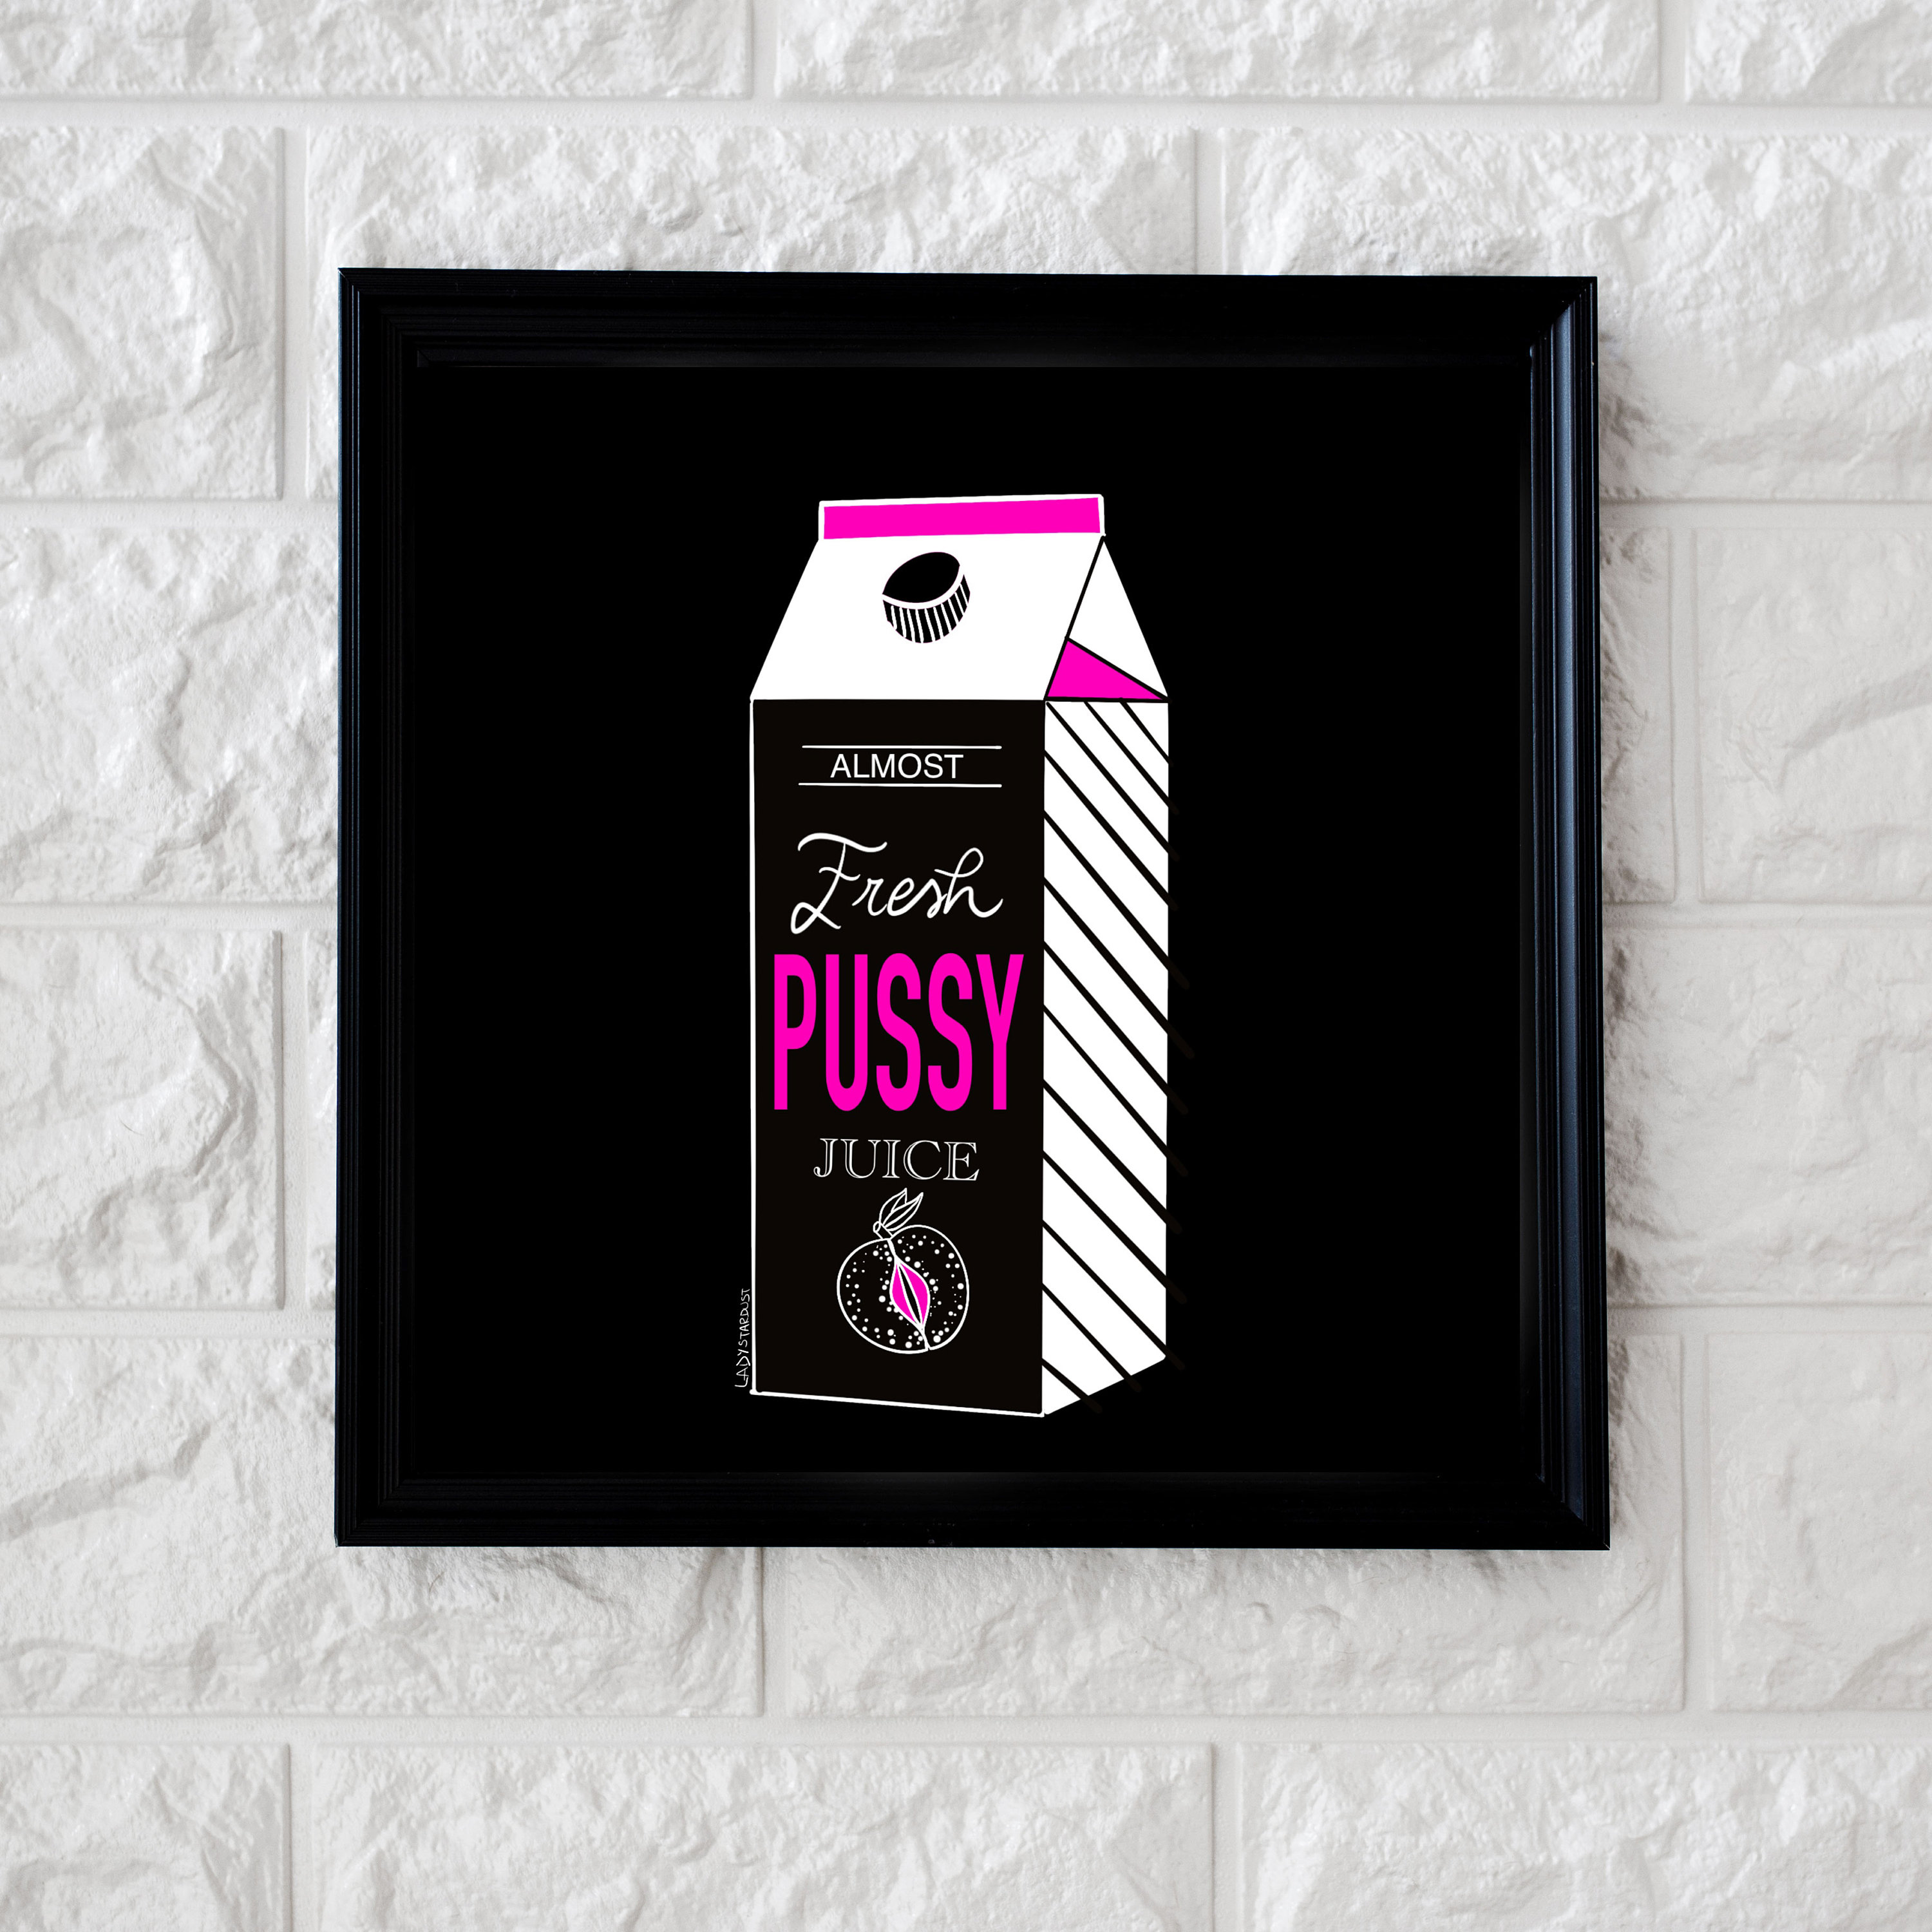 Pussy Juice image